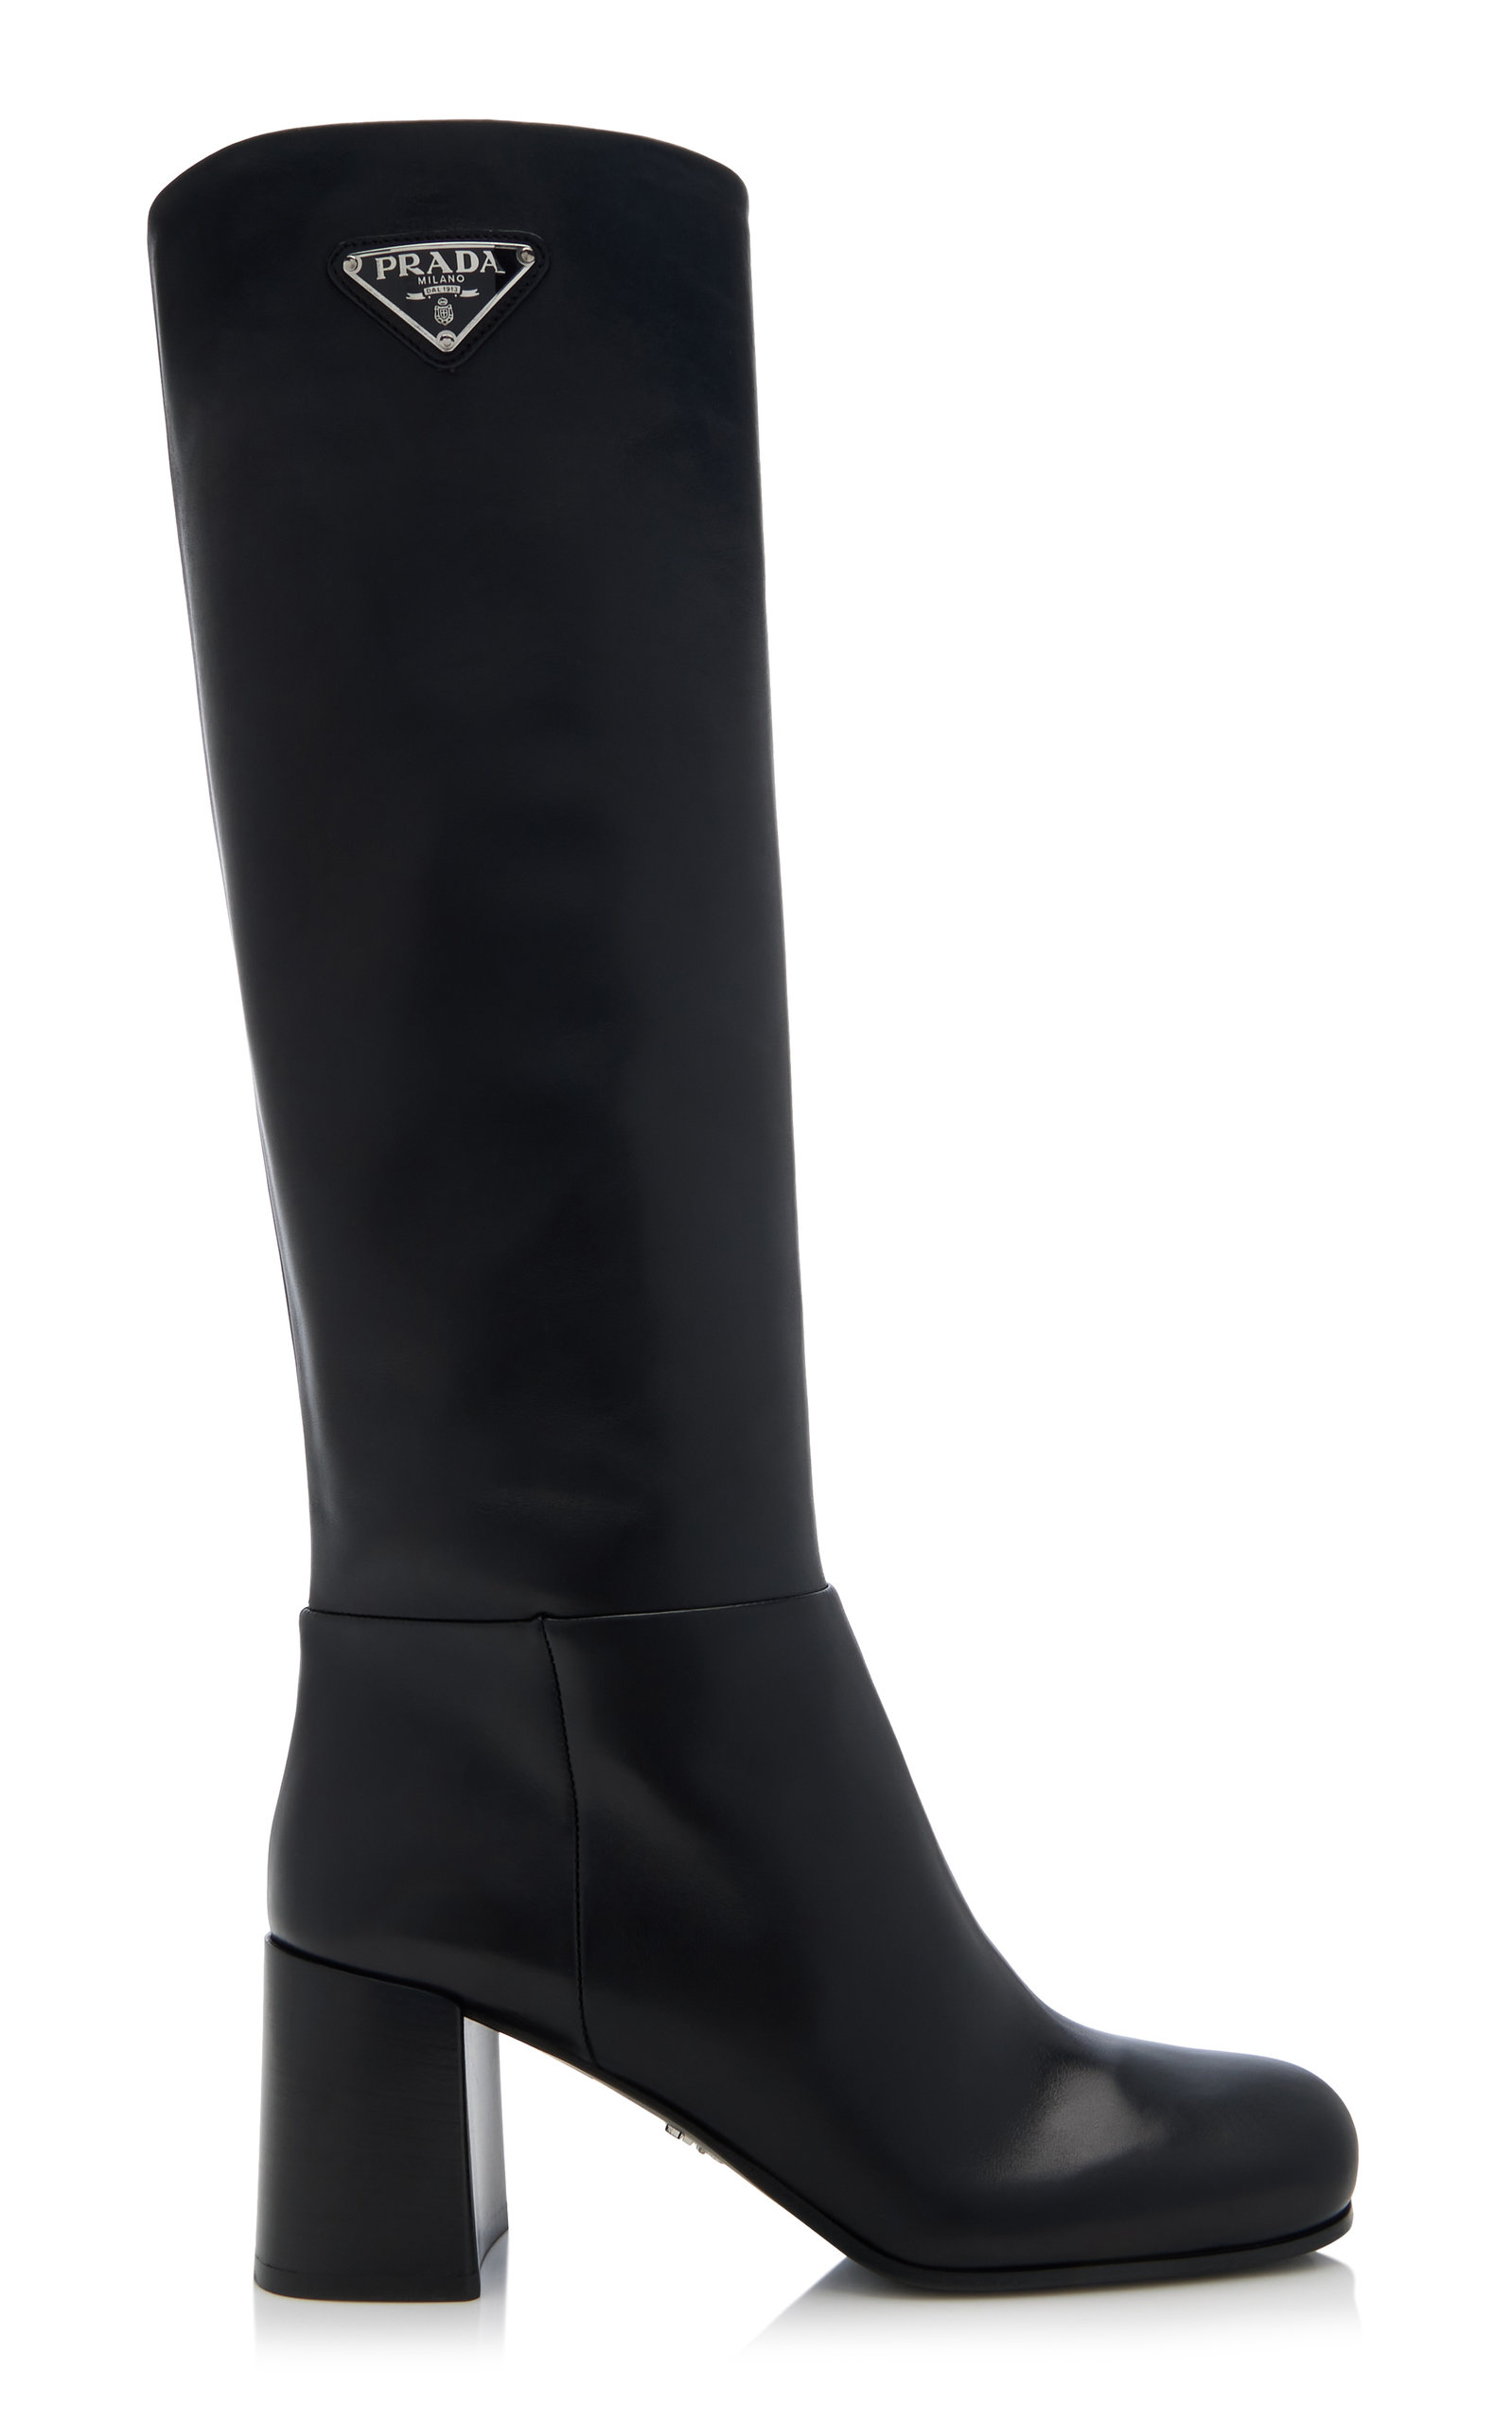 Prada - Women's Stivali Leather Knee Boots - Black - IT 36.5 - Moda Operandi